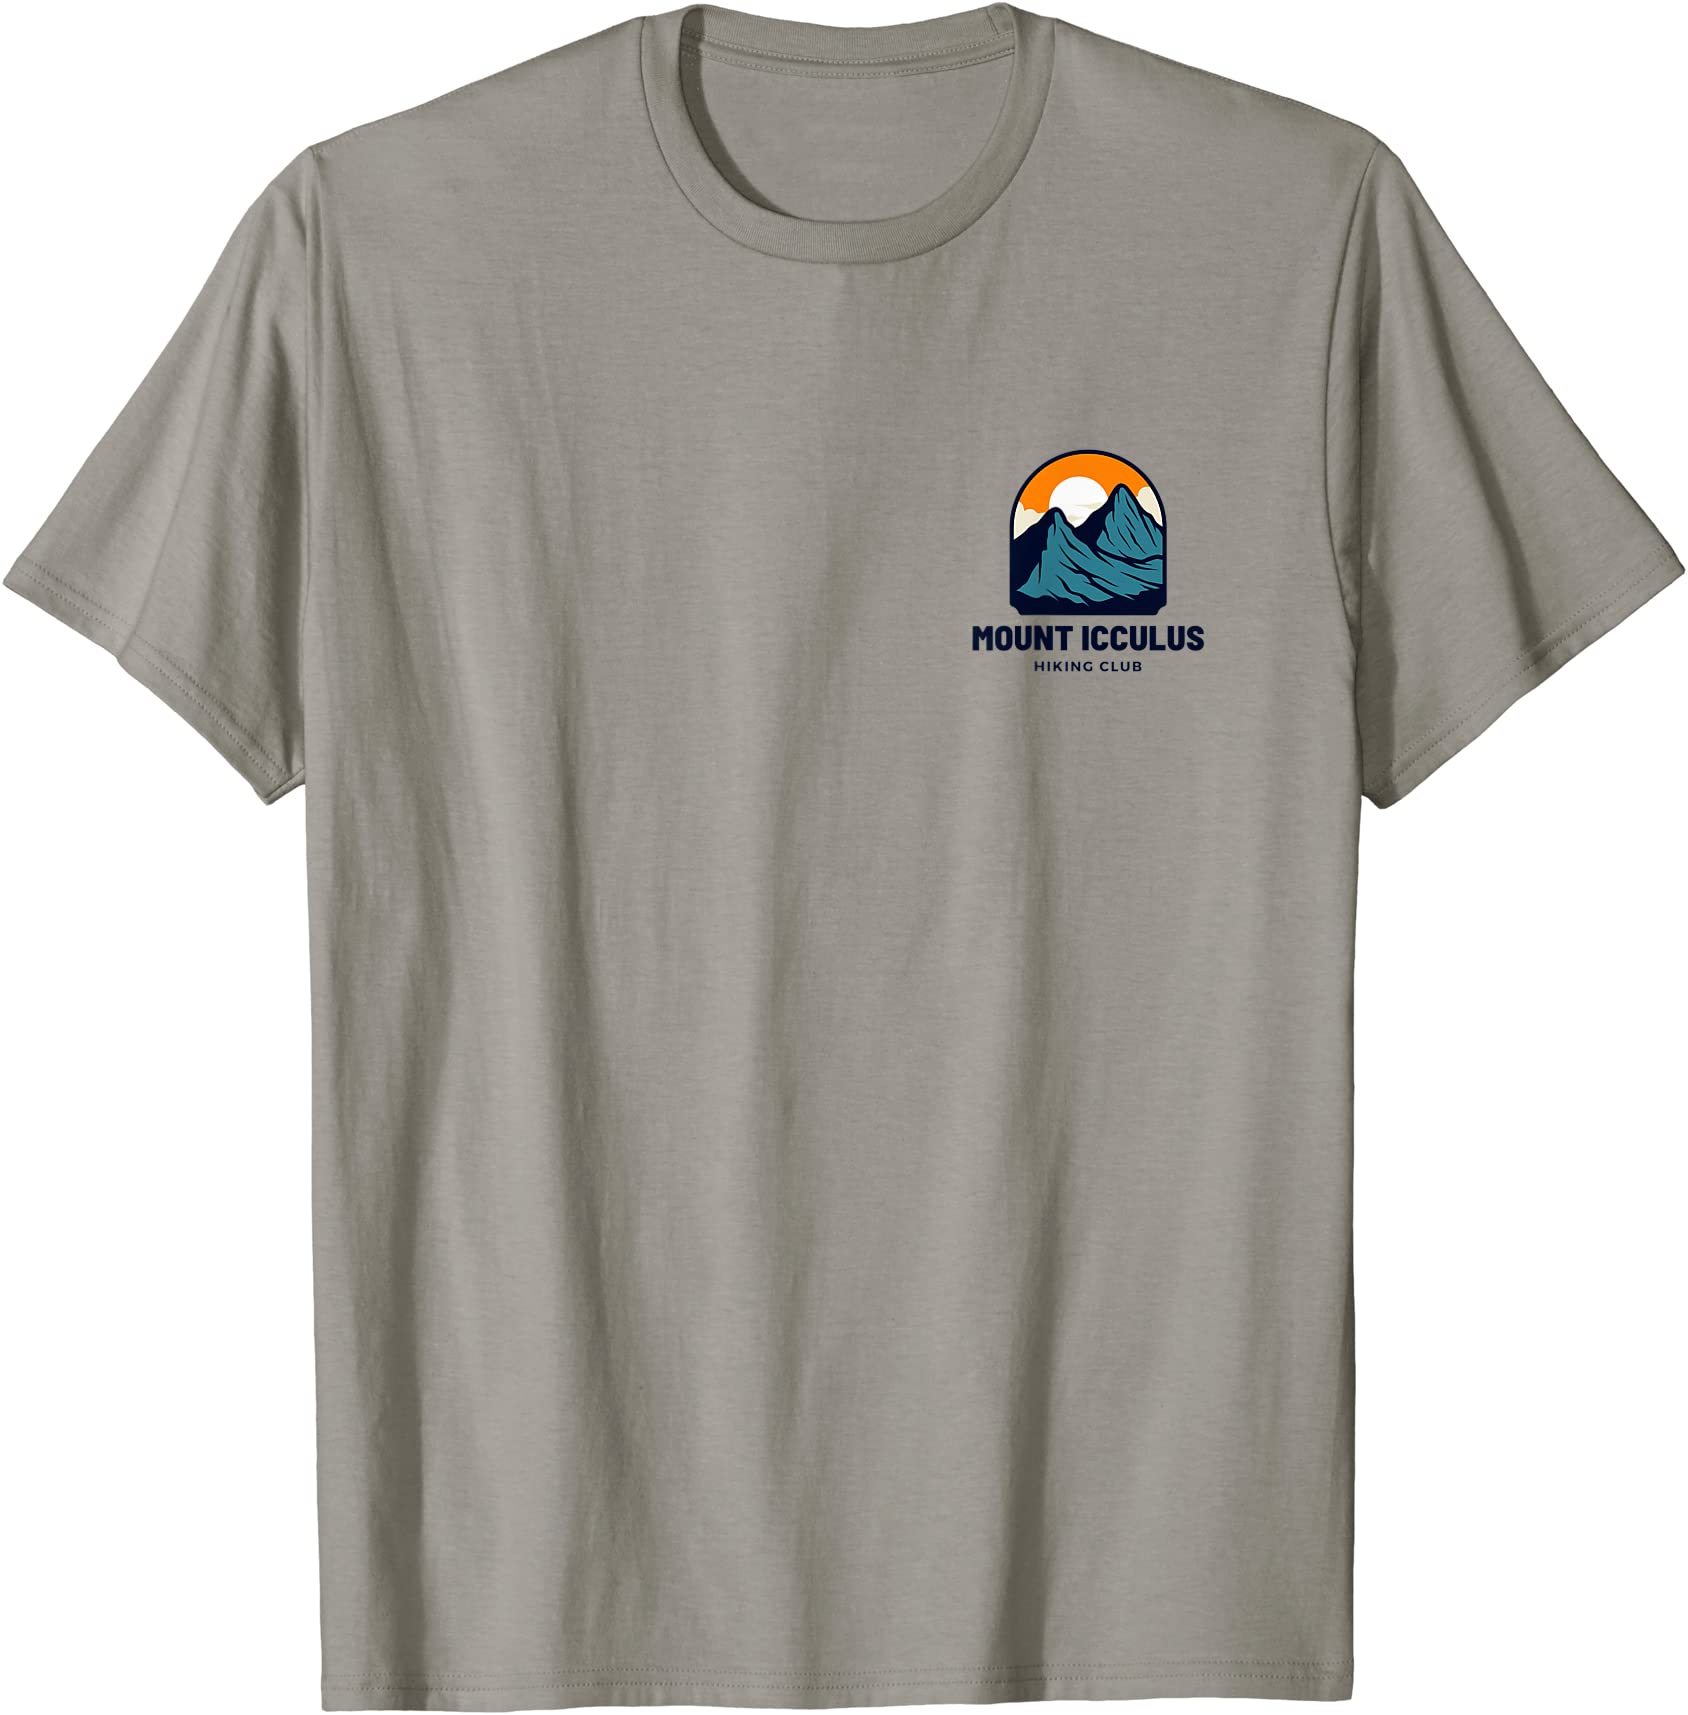 Mount Icculus Hiking Club T-shirt Plus Size Up To 5xl teehz.com